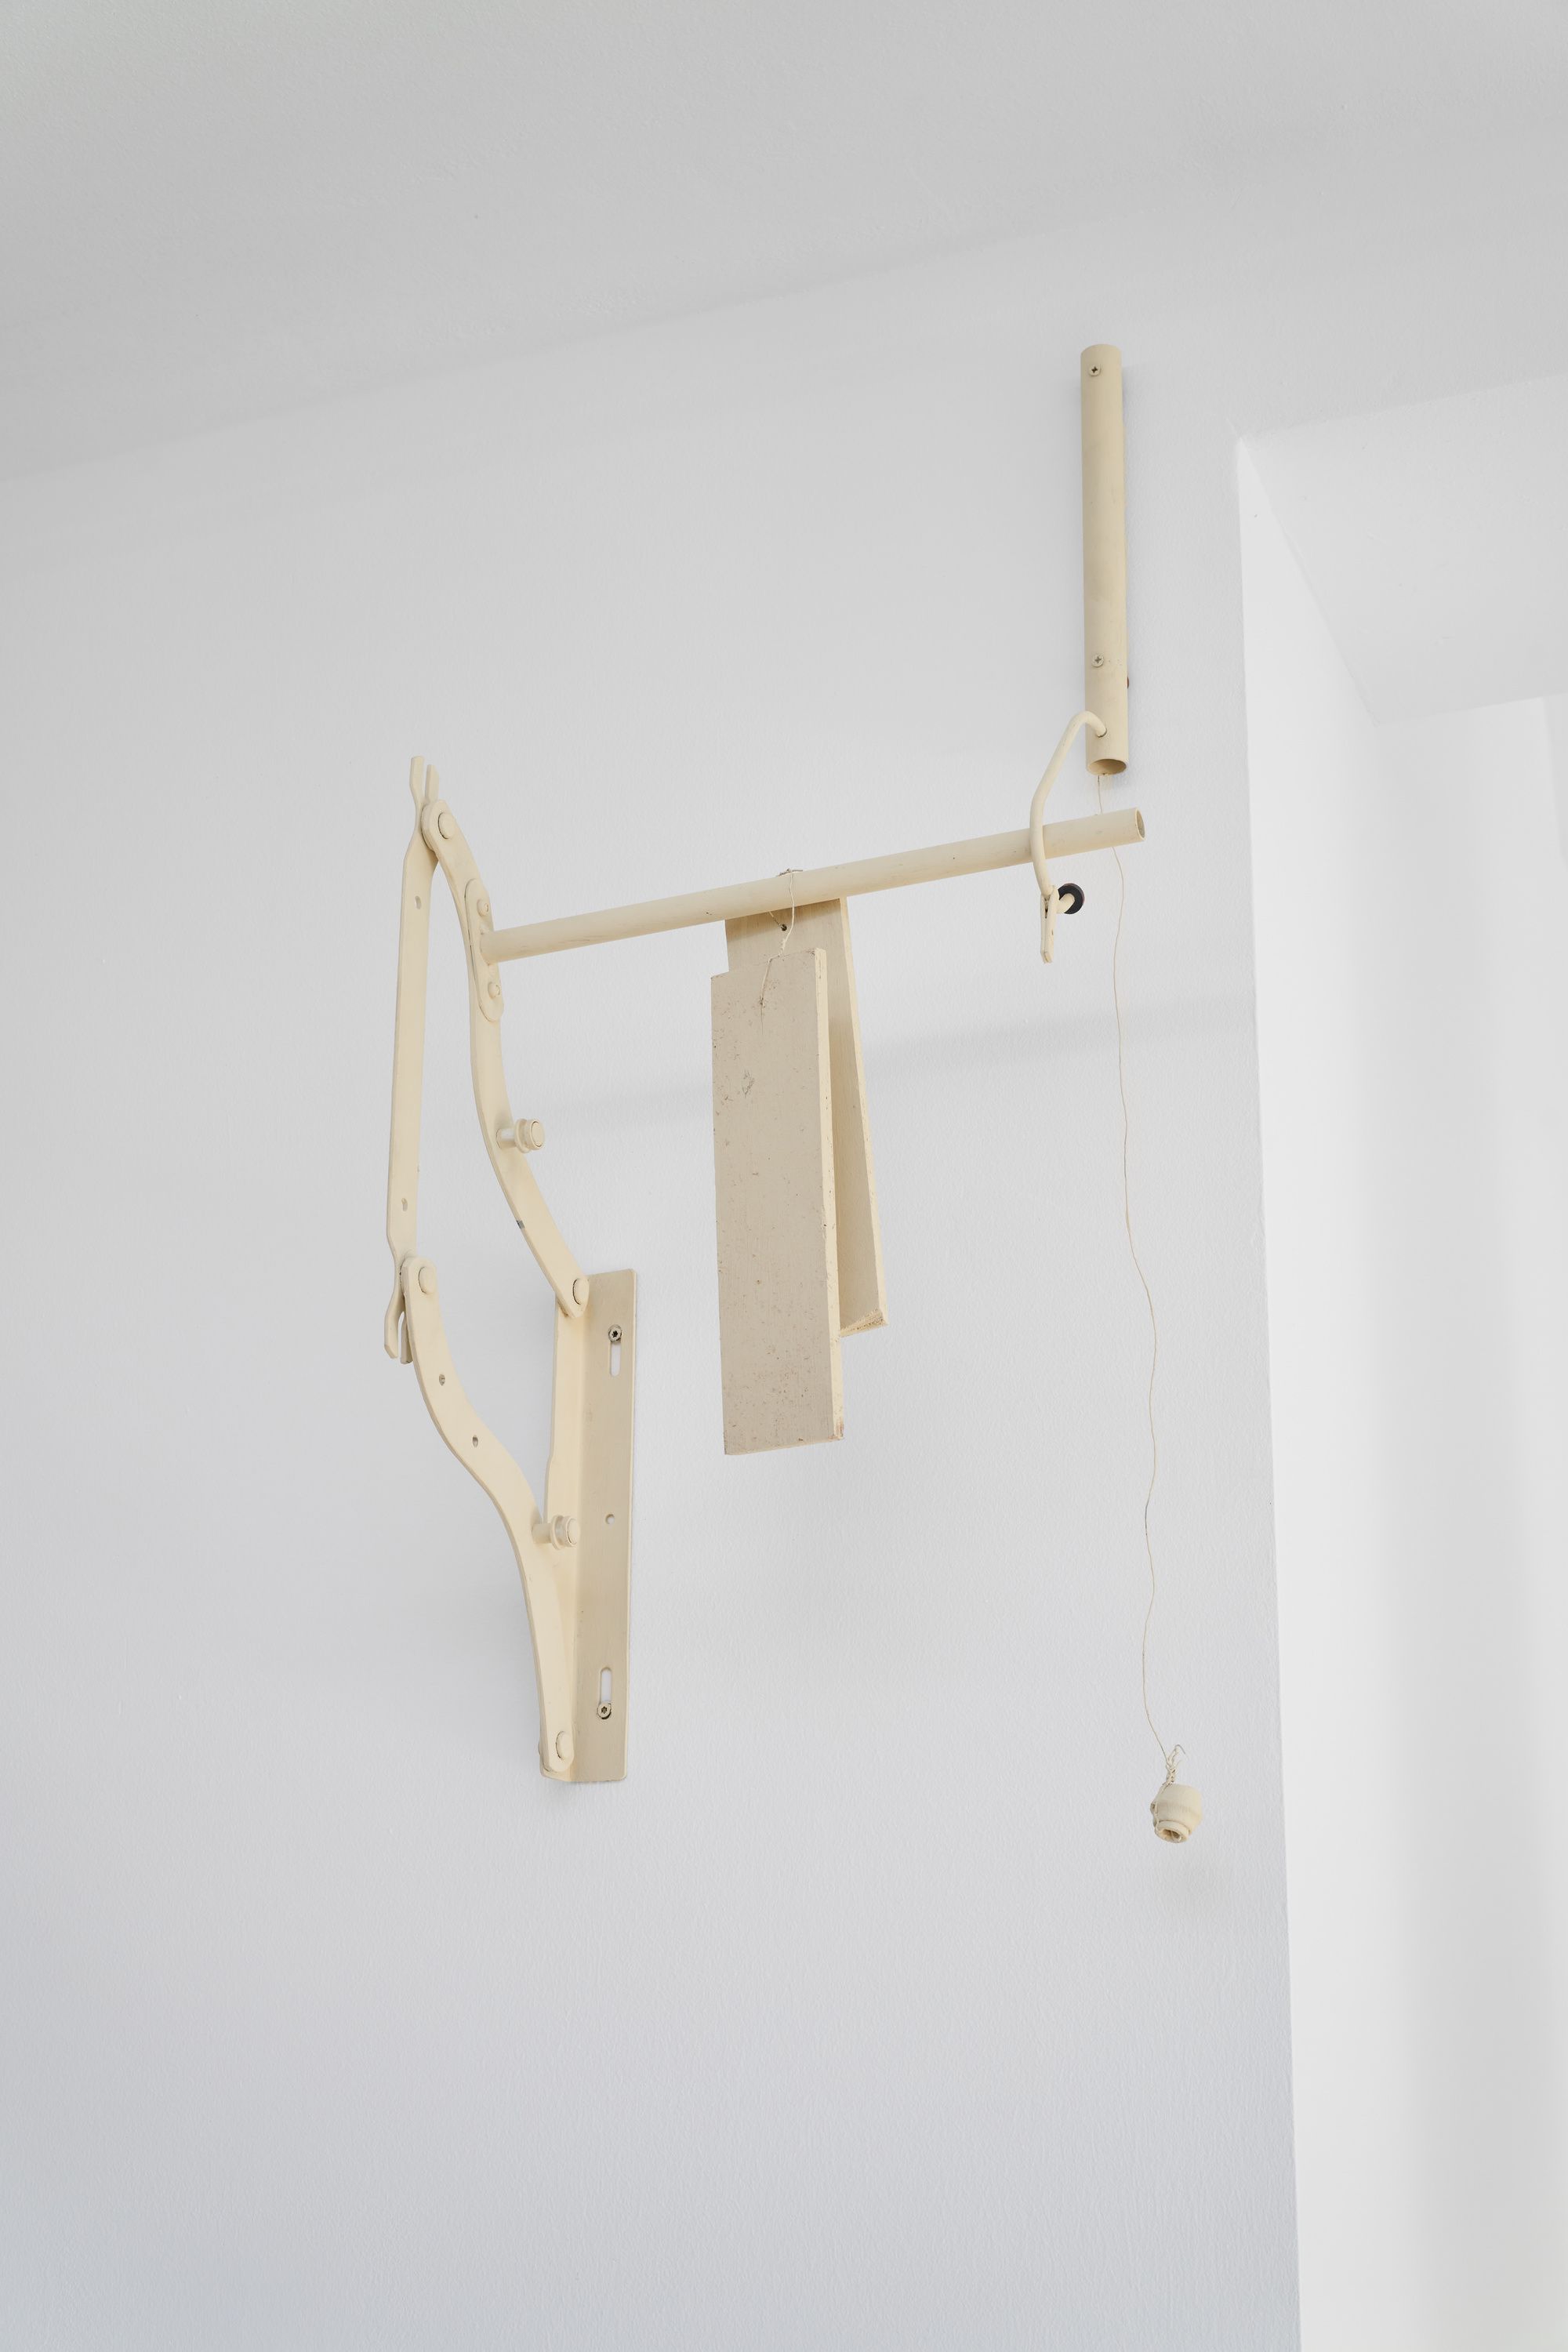 Tomaso De Luca, Slapper, 2023, Stainless steel, plastic, rubber, screws, wood, iron wire, sawdust, varnish, 79 ⁠× ⁠33 ⁠× ⁠20 ⁠⁠cm